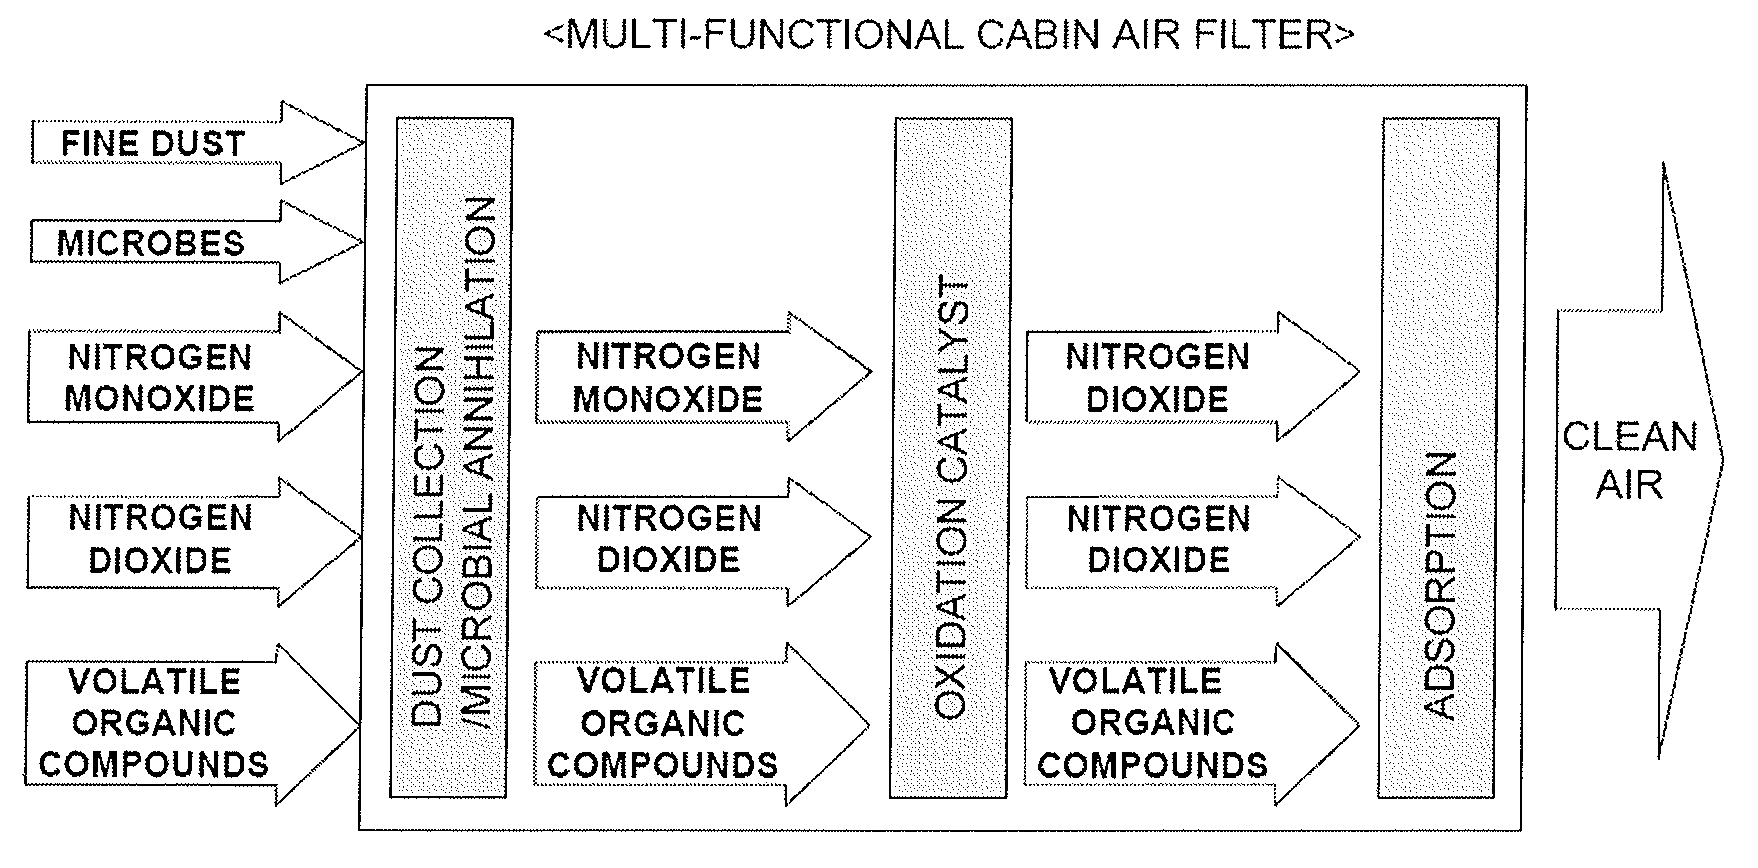 Multi-functional cabin air filter